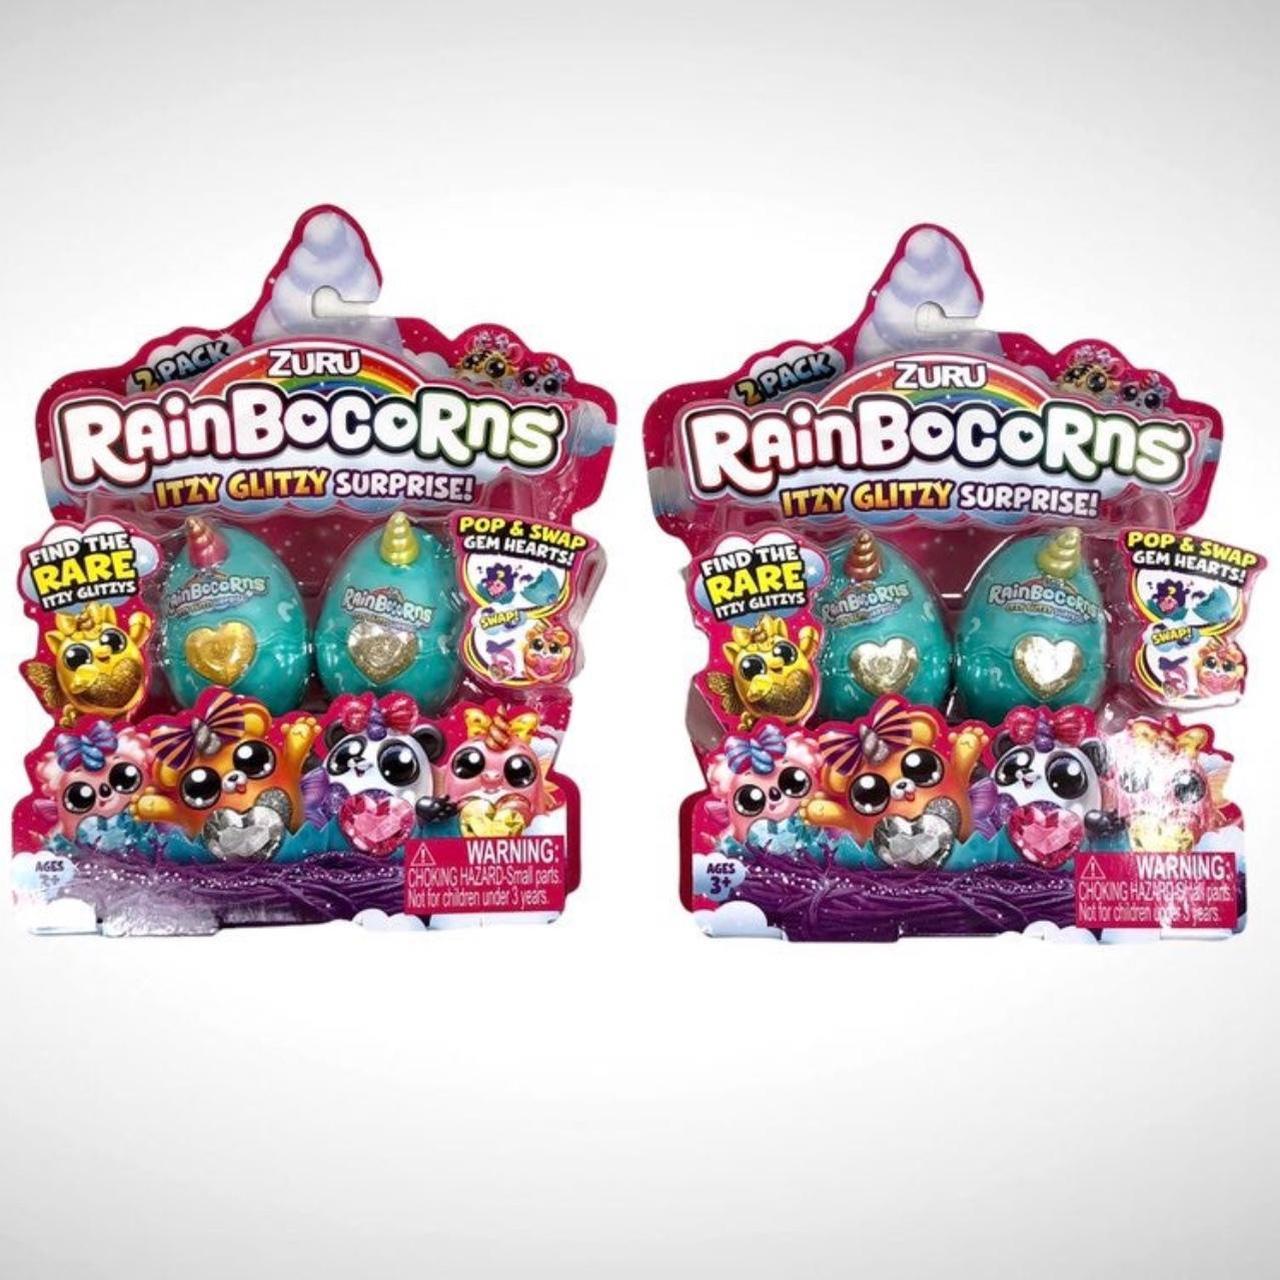 Rainbocorns Itzy Glitzy Surprise Rainbocorns Series 2 Collectible